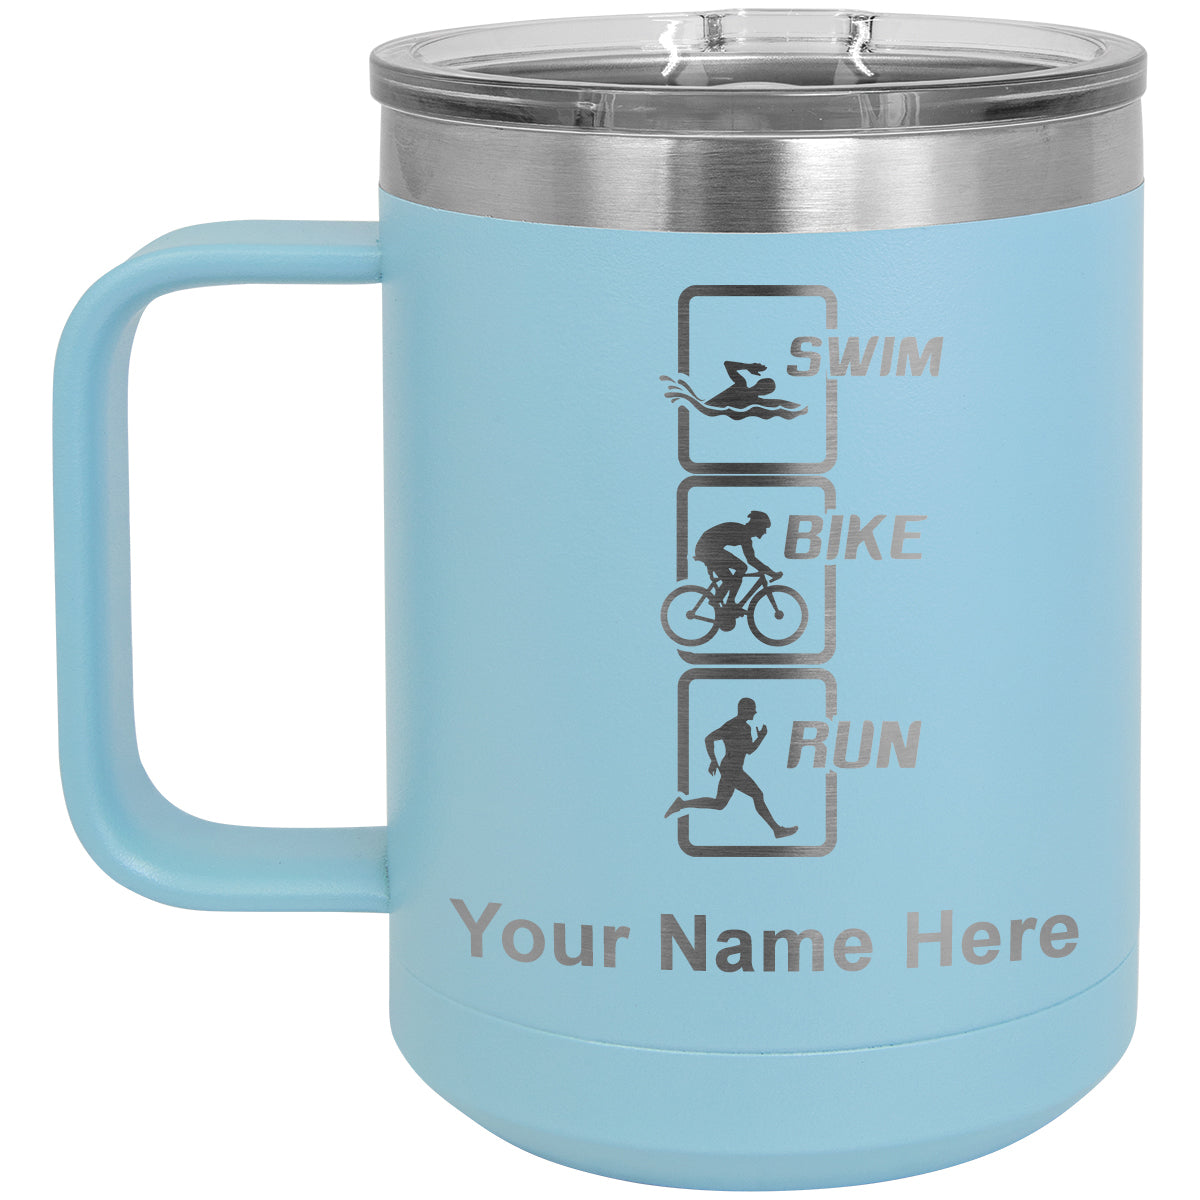 15oz Vacuum Insulated Coffee Mug, Swim Bike Run Vertical, Personalized Engraving Included